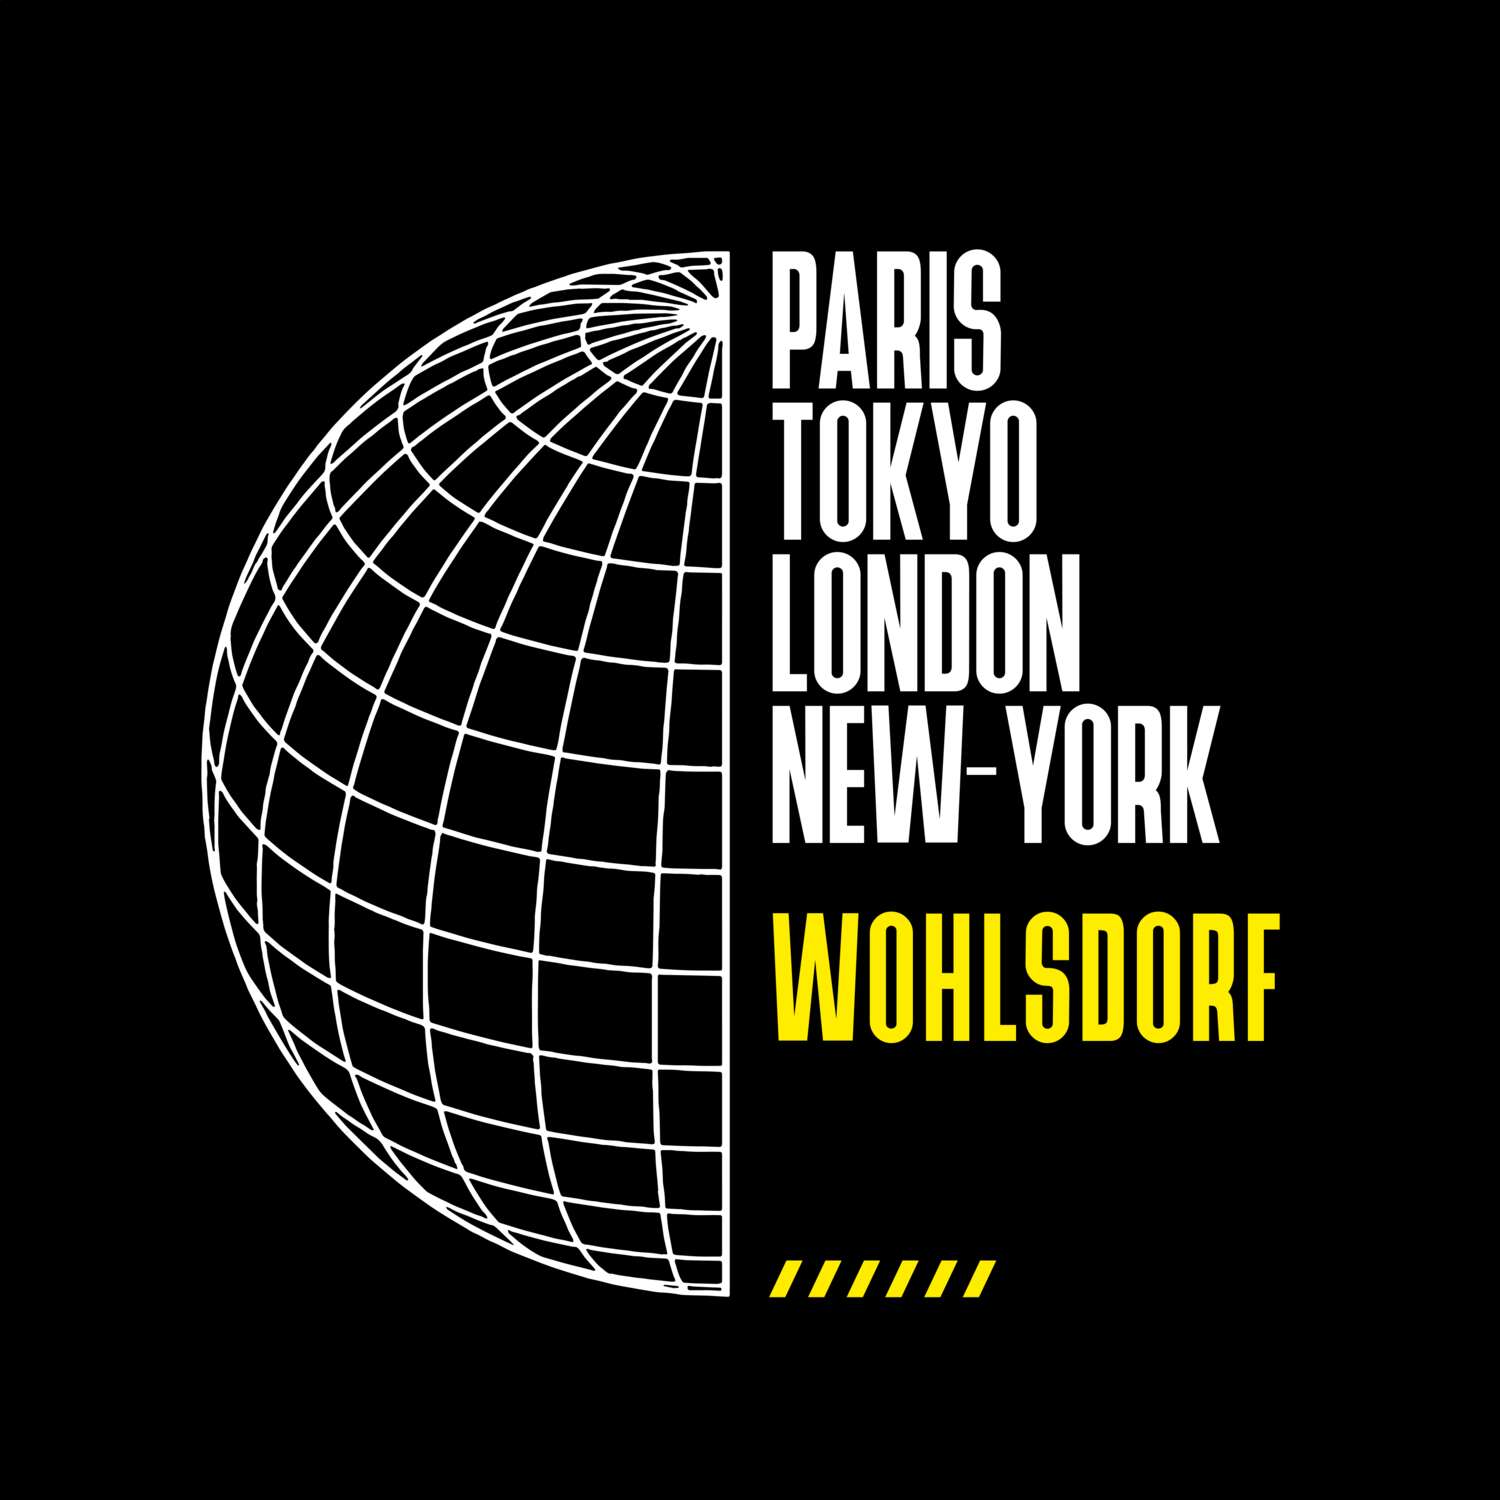 Wohlsdorf T-Shirt »Paris Tokyo London«